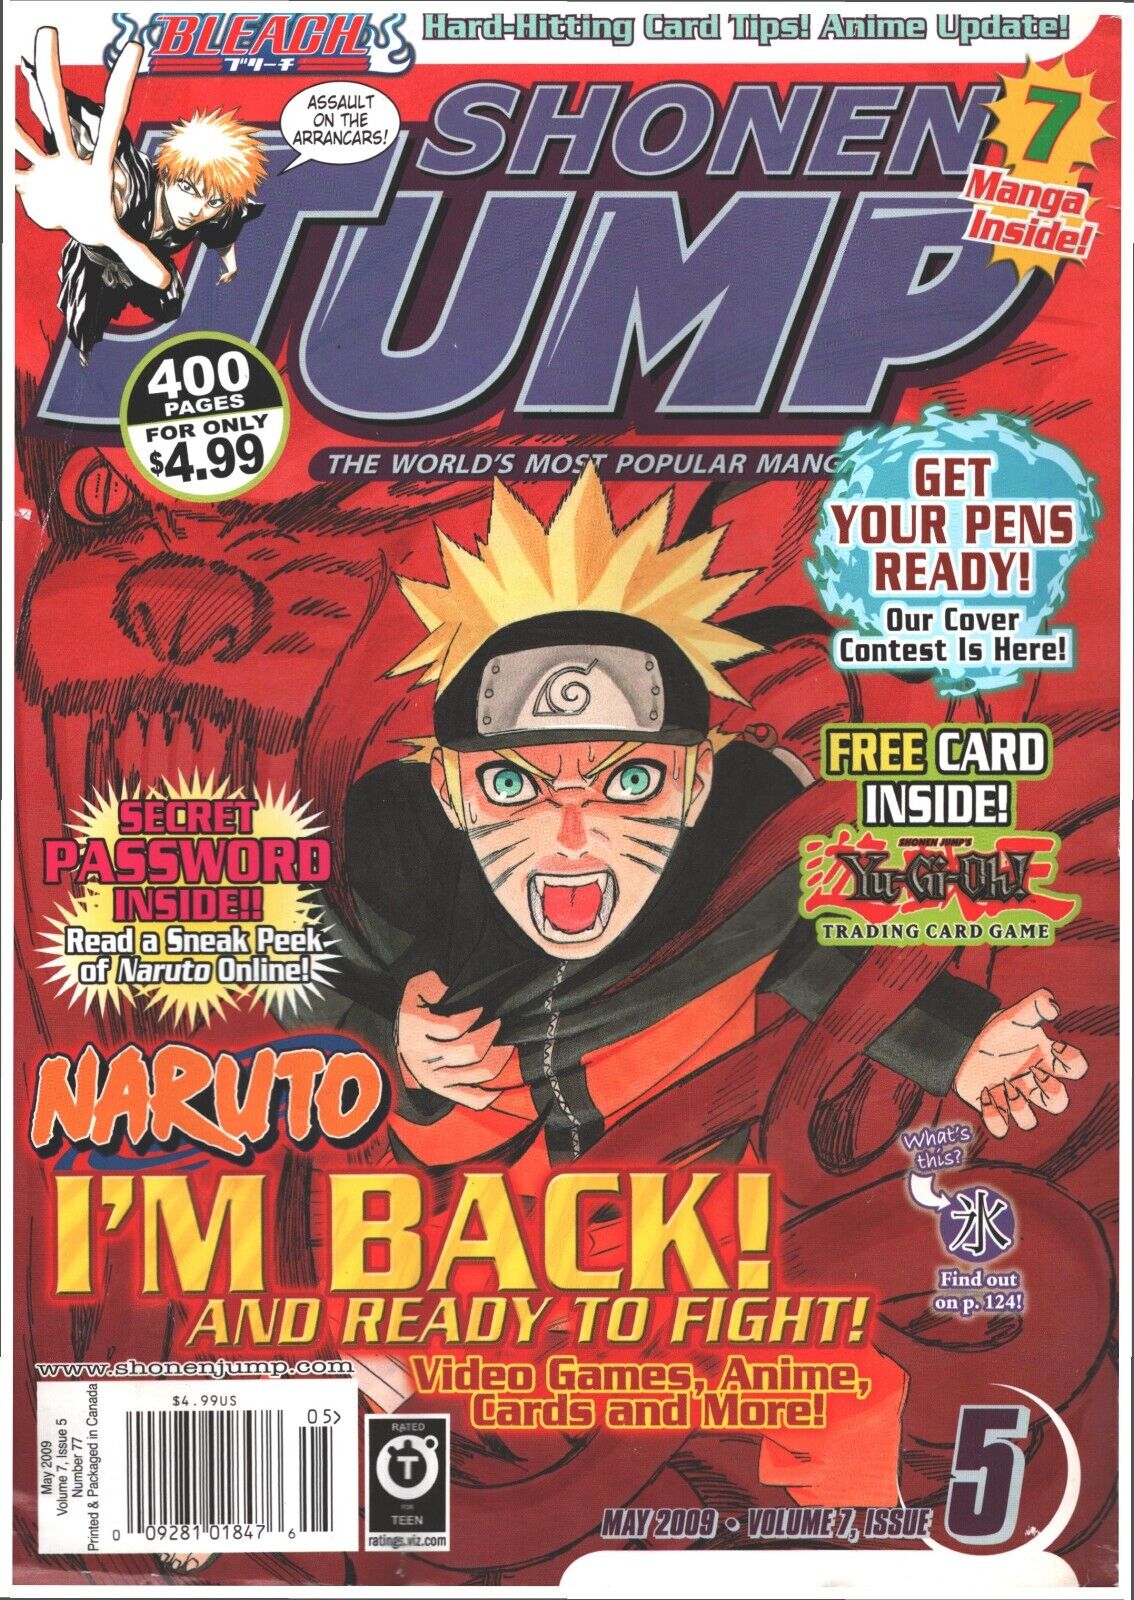 Shonen Jump Man May 2009 Volume 7 Issue 5 Magazine English No Card